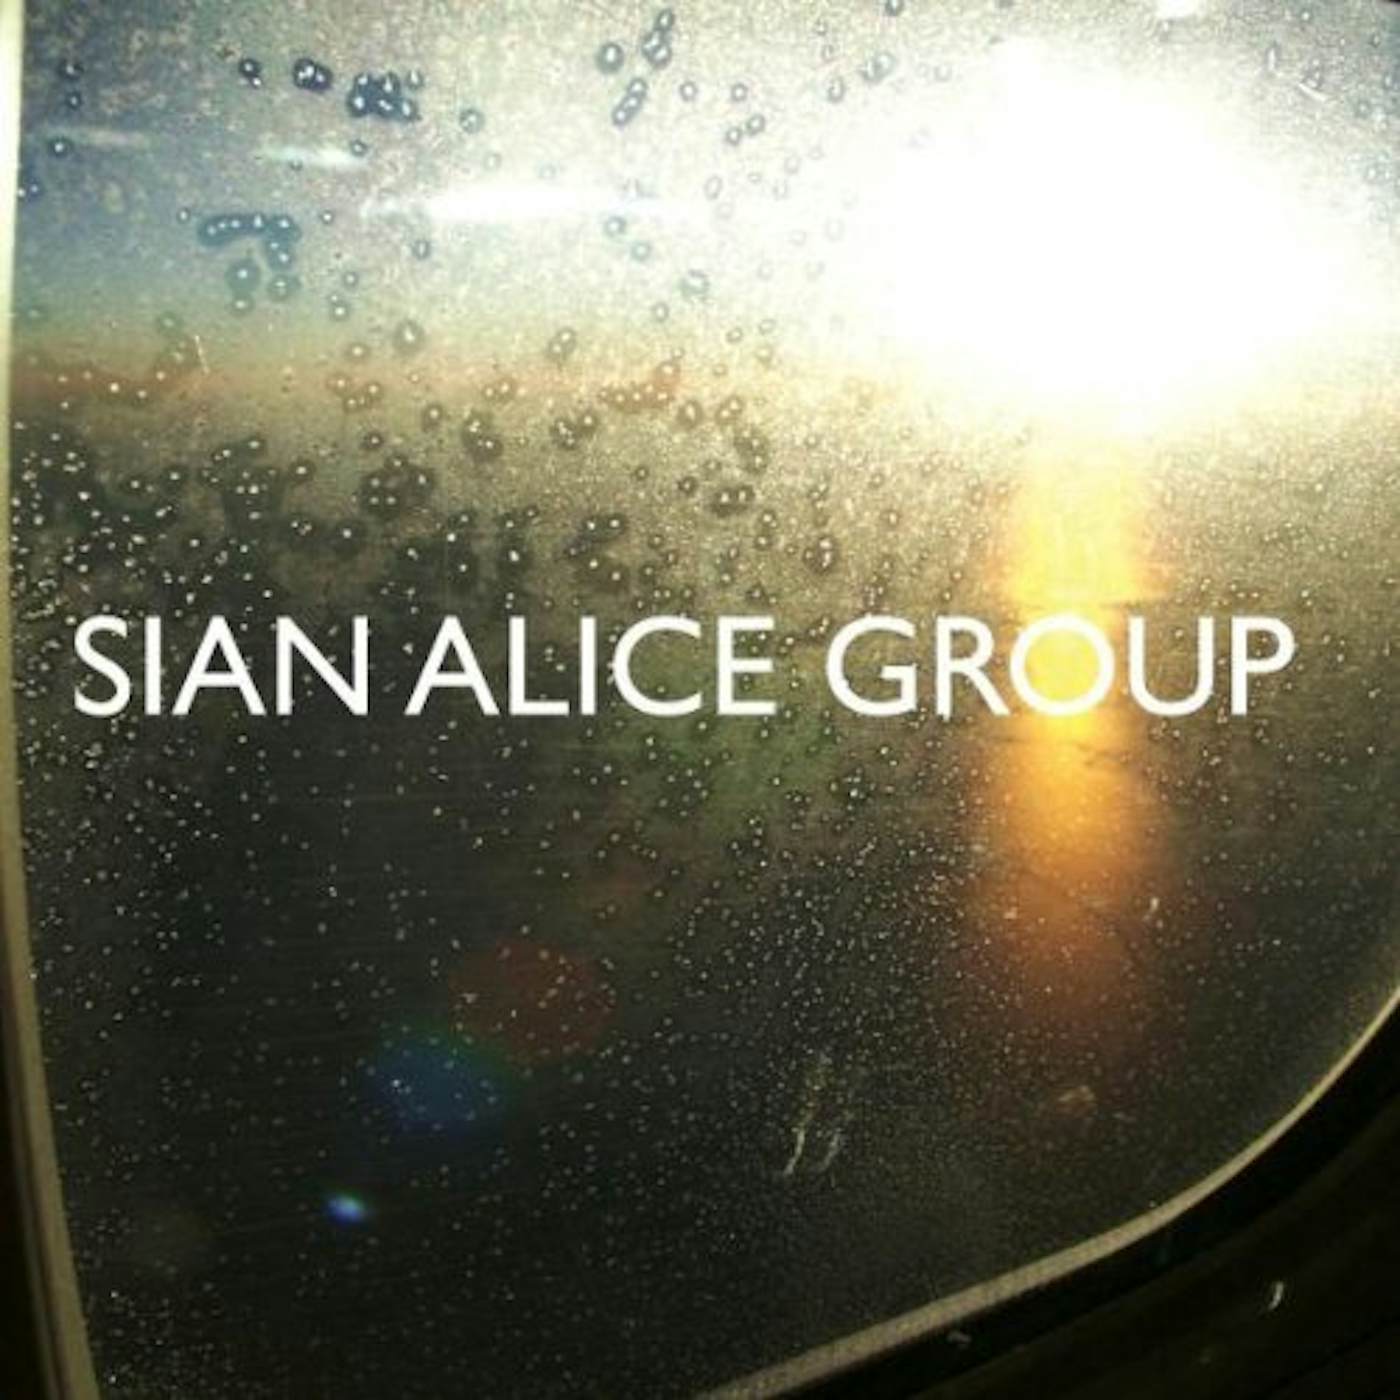 Sian Alice Group TROUBLE SHAKEN ETC CD